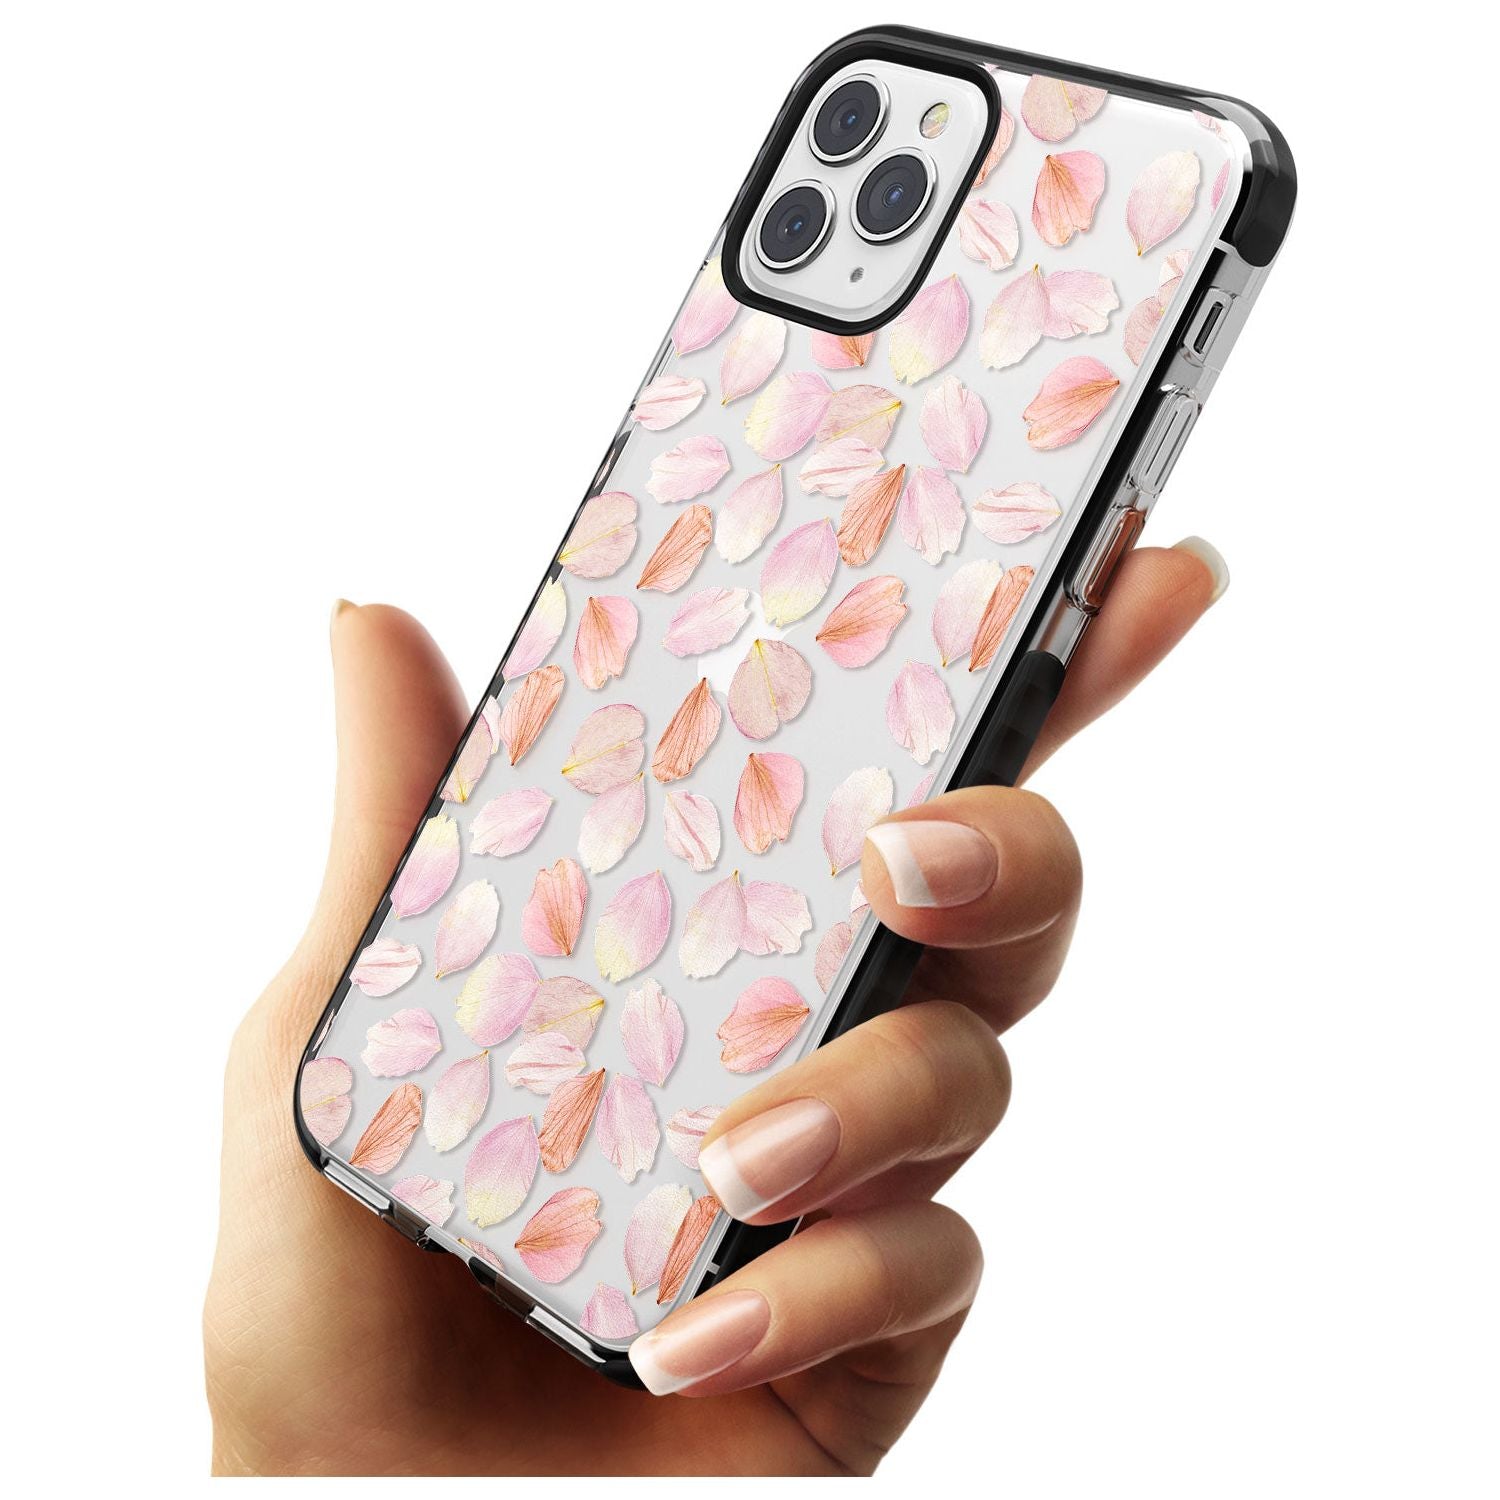 Pink Petals Transparent Design Black Impact Phone Case for iPhone 11 Pro Max